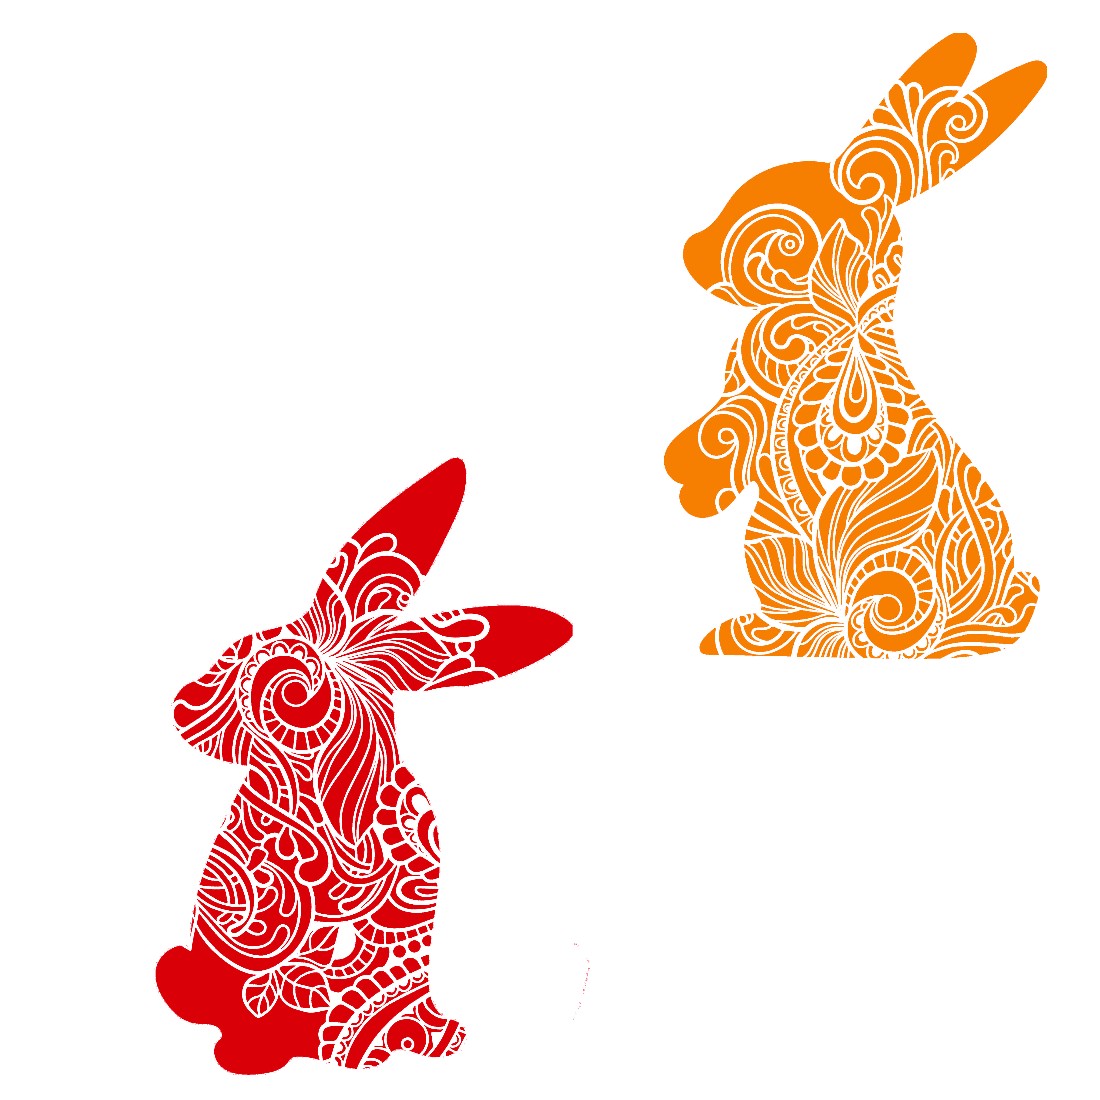 Decorative Bunny Set of 6 Stickers Muliti Colored Colorful Rabbit Animal SVG Files cover image.